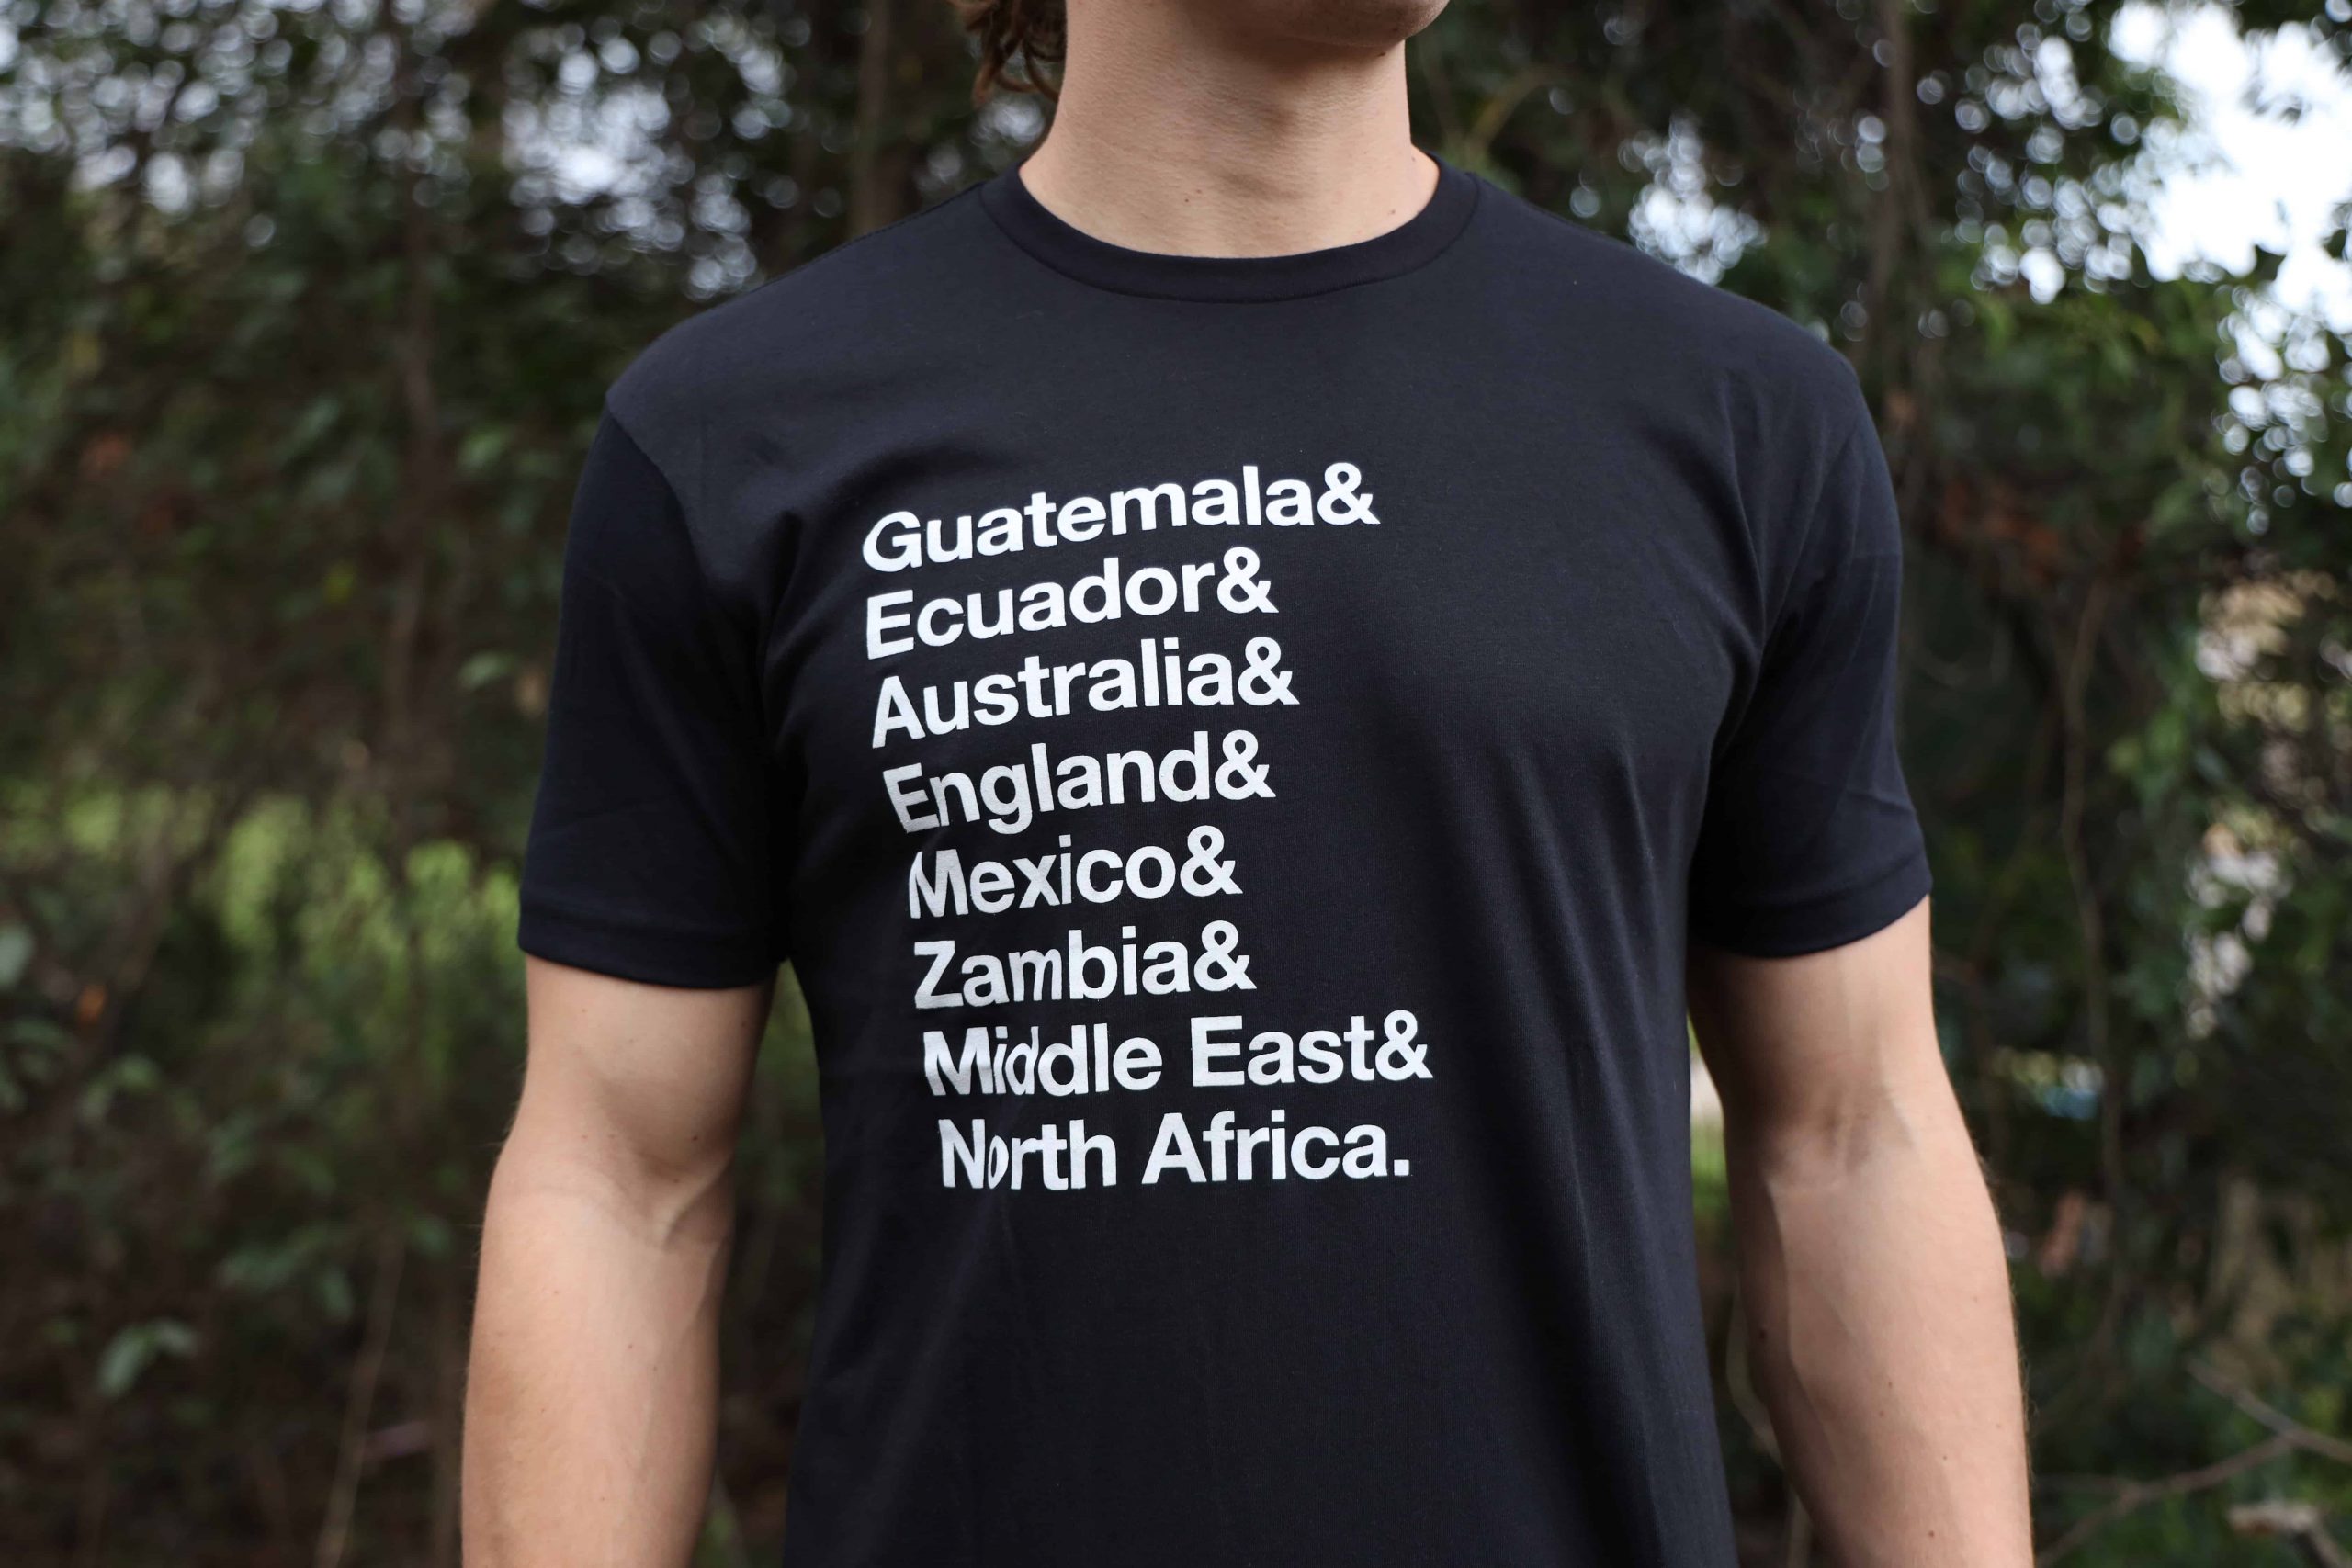 Man wearing black shirt that says "Guatemala & Ecuador & Australia & England & Mexico & Zambia & Middle East & North Africa"